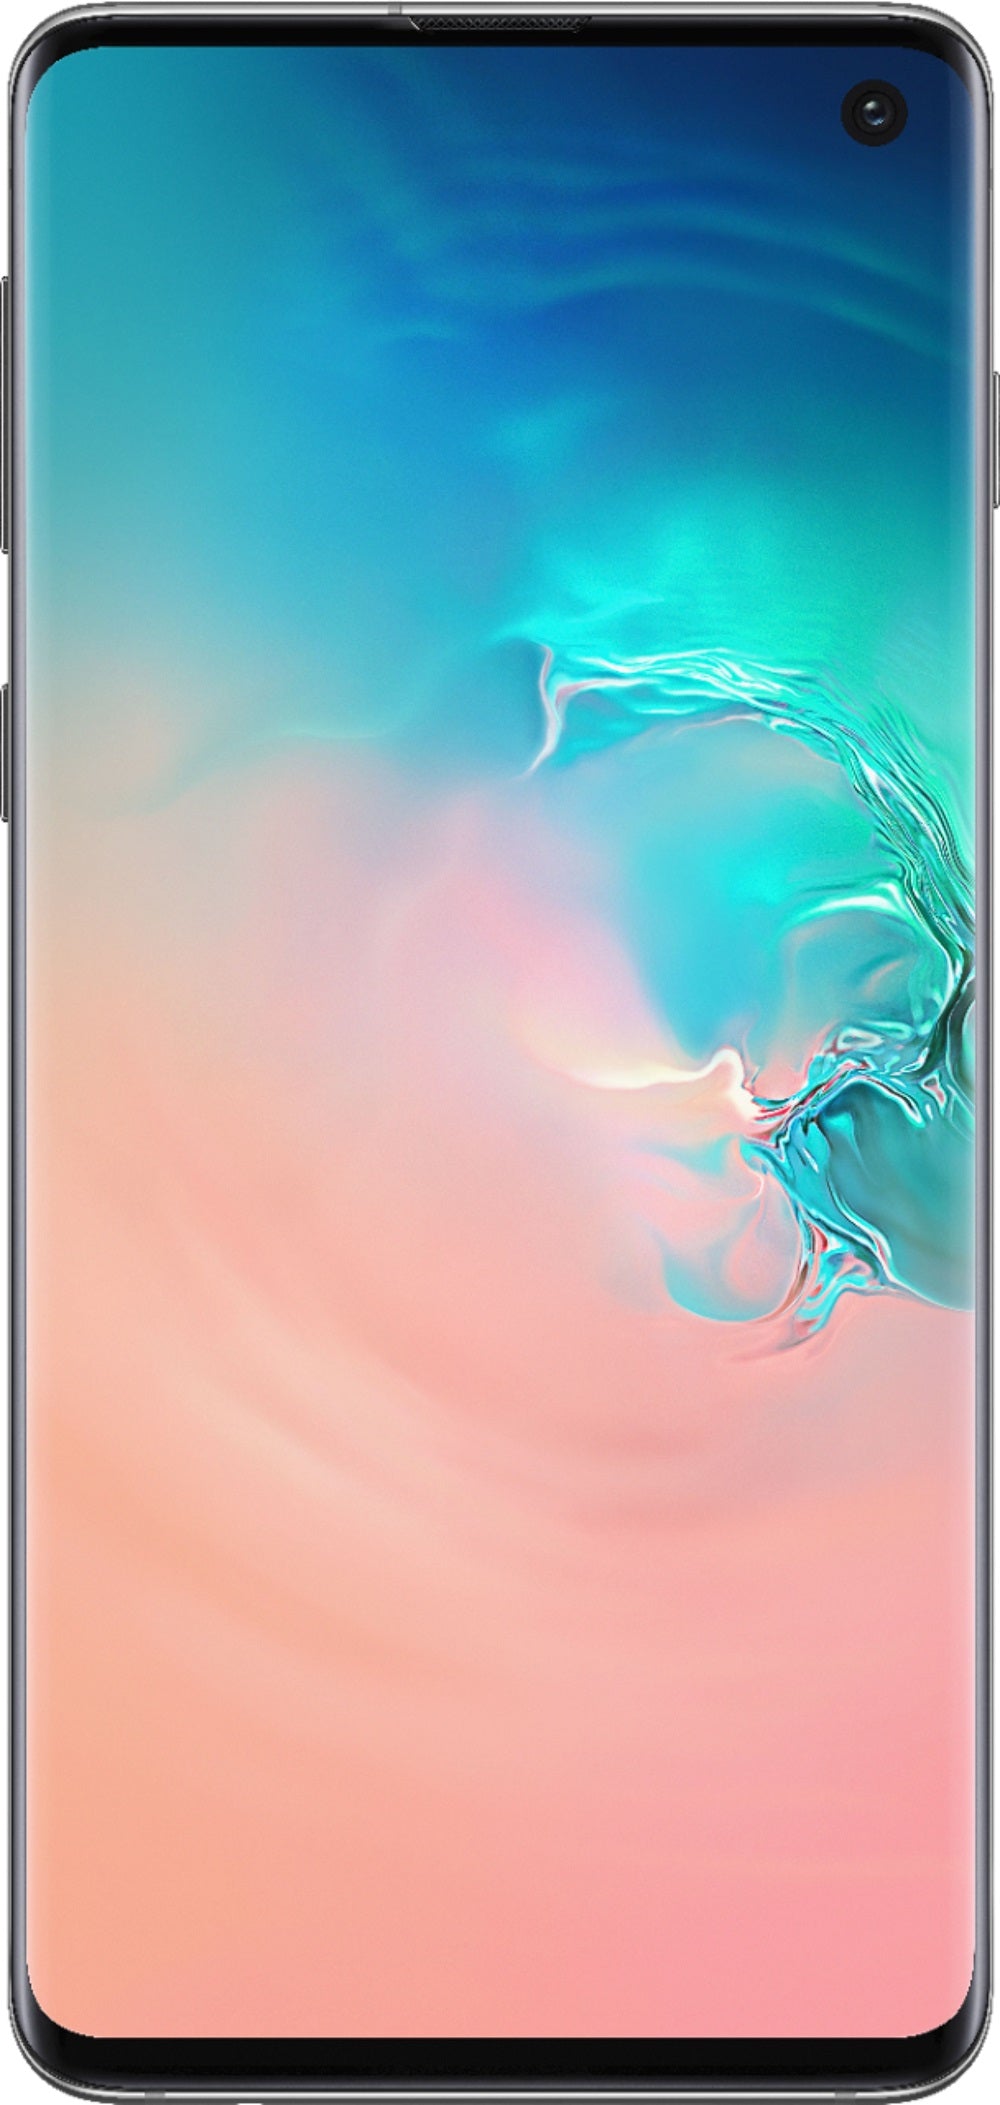 Galaxy S10 128GB - Prism White - Fully unlocked (GSM & CDMA)